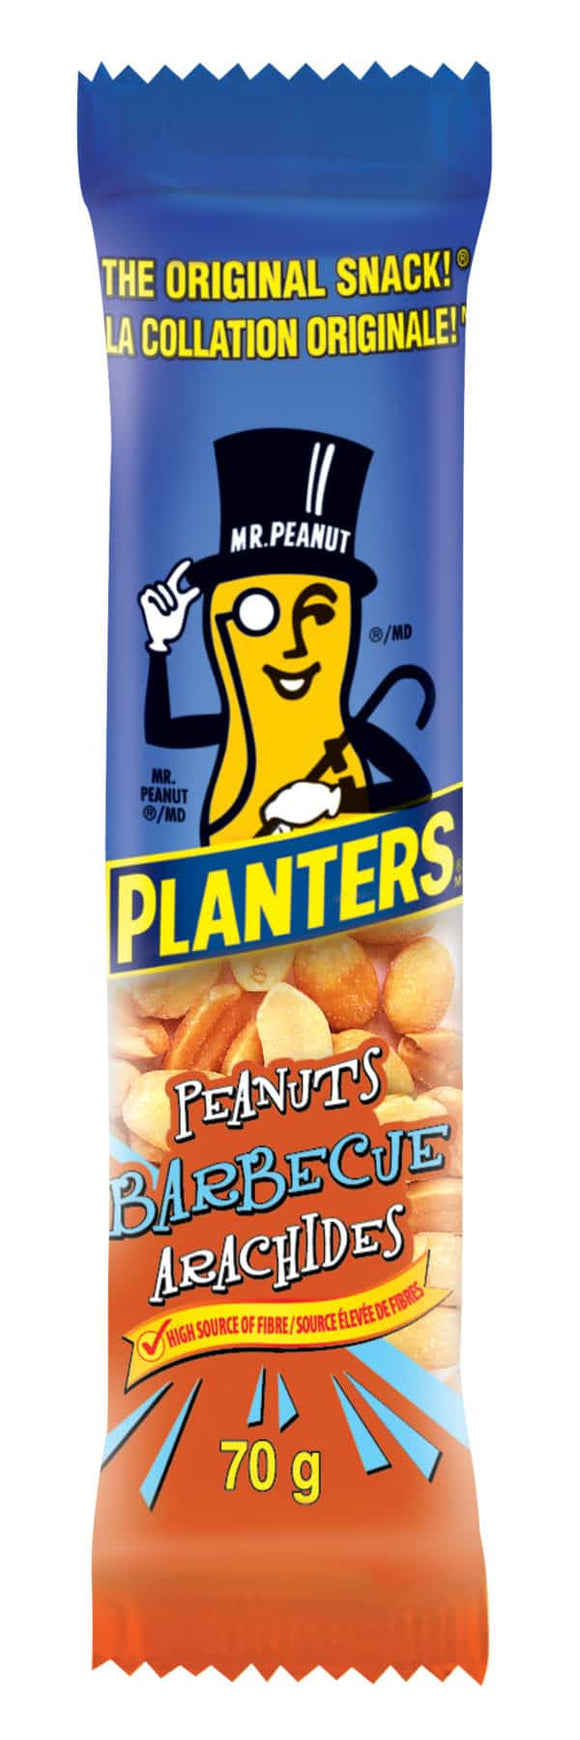 Planters BBQ Peanuts Tube